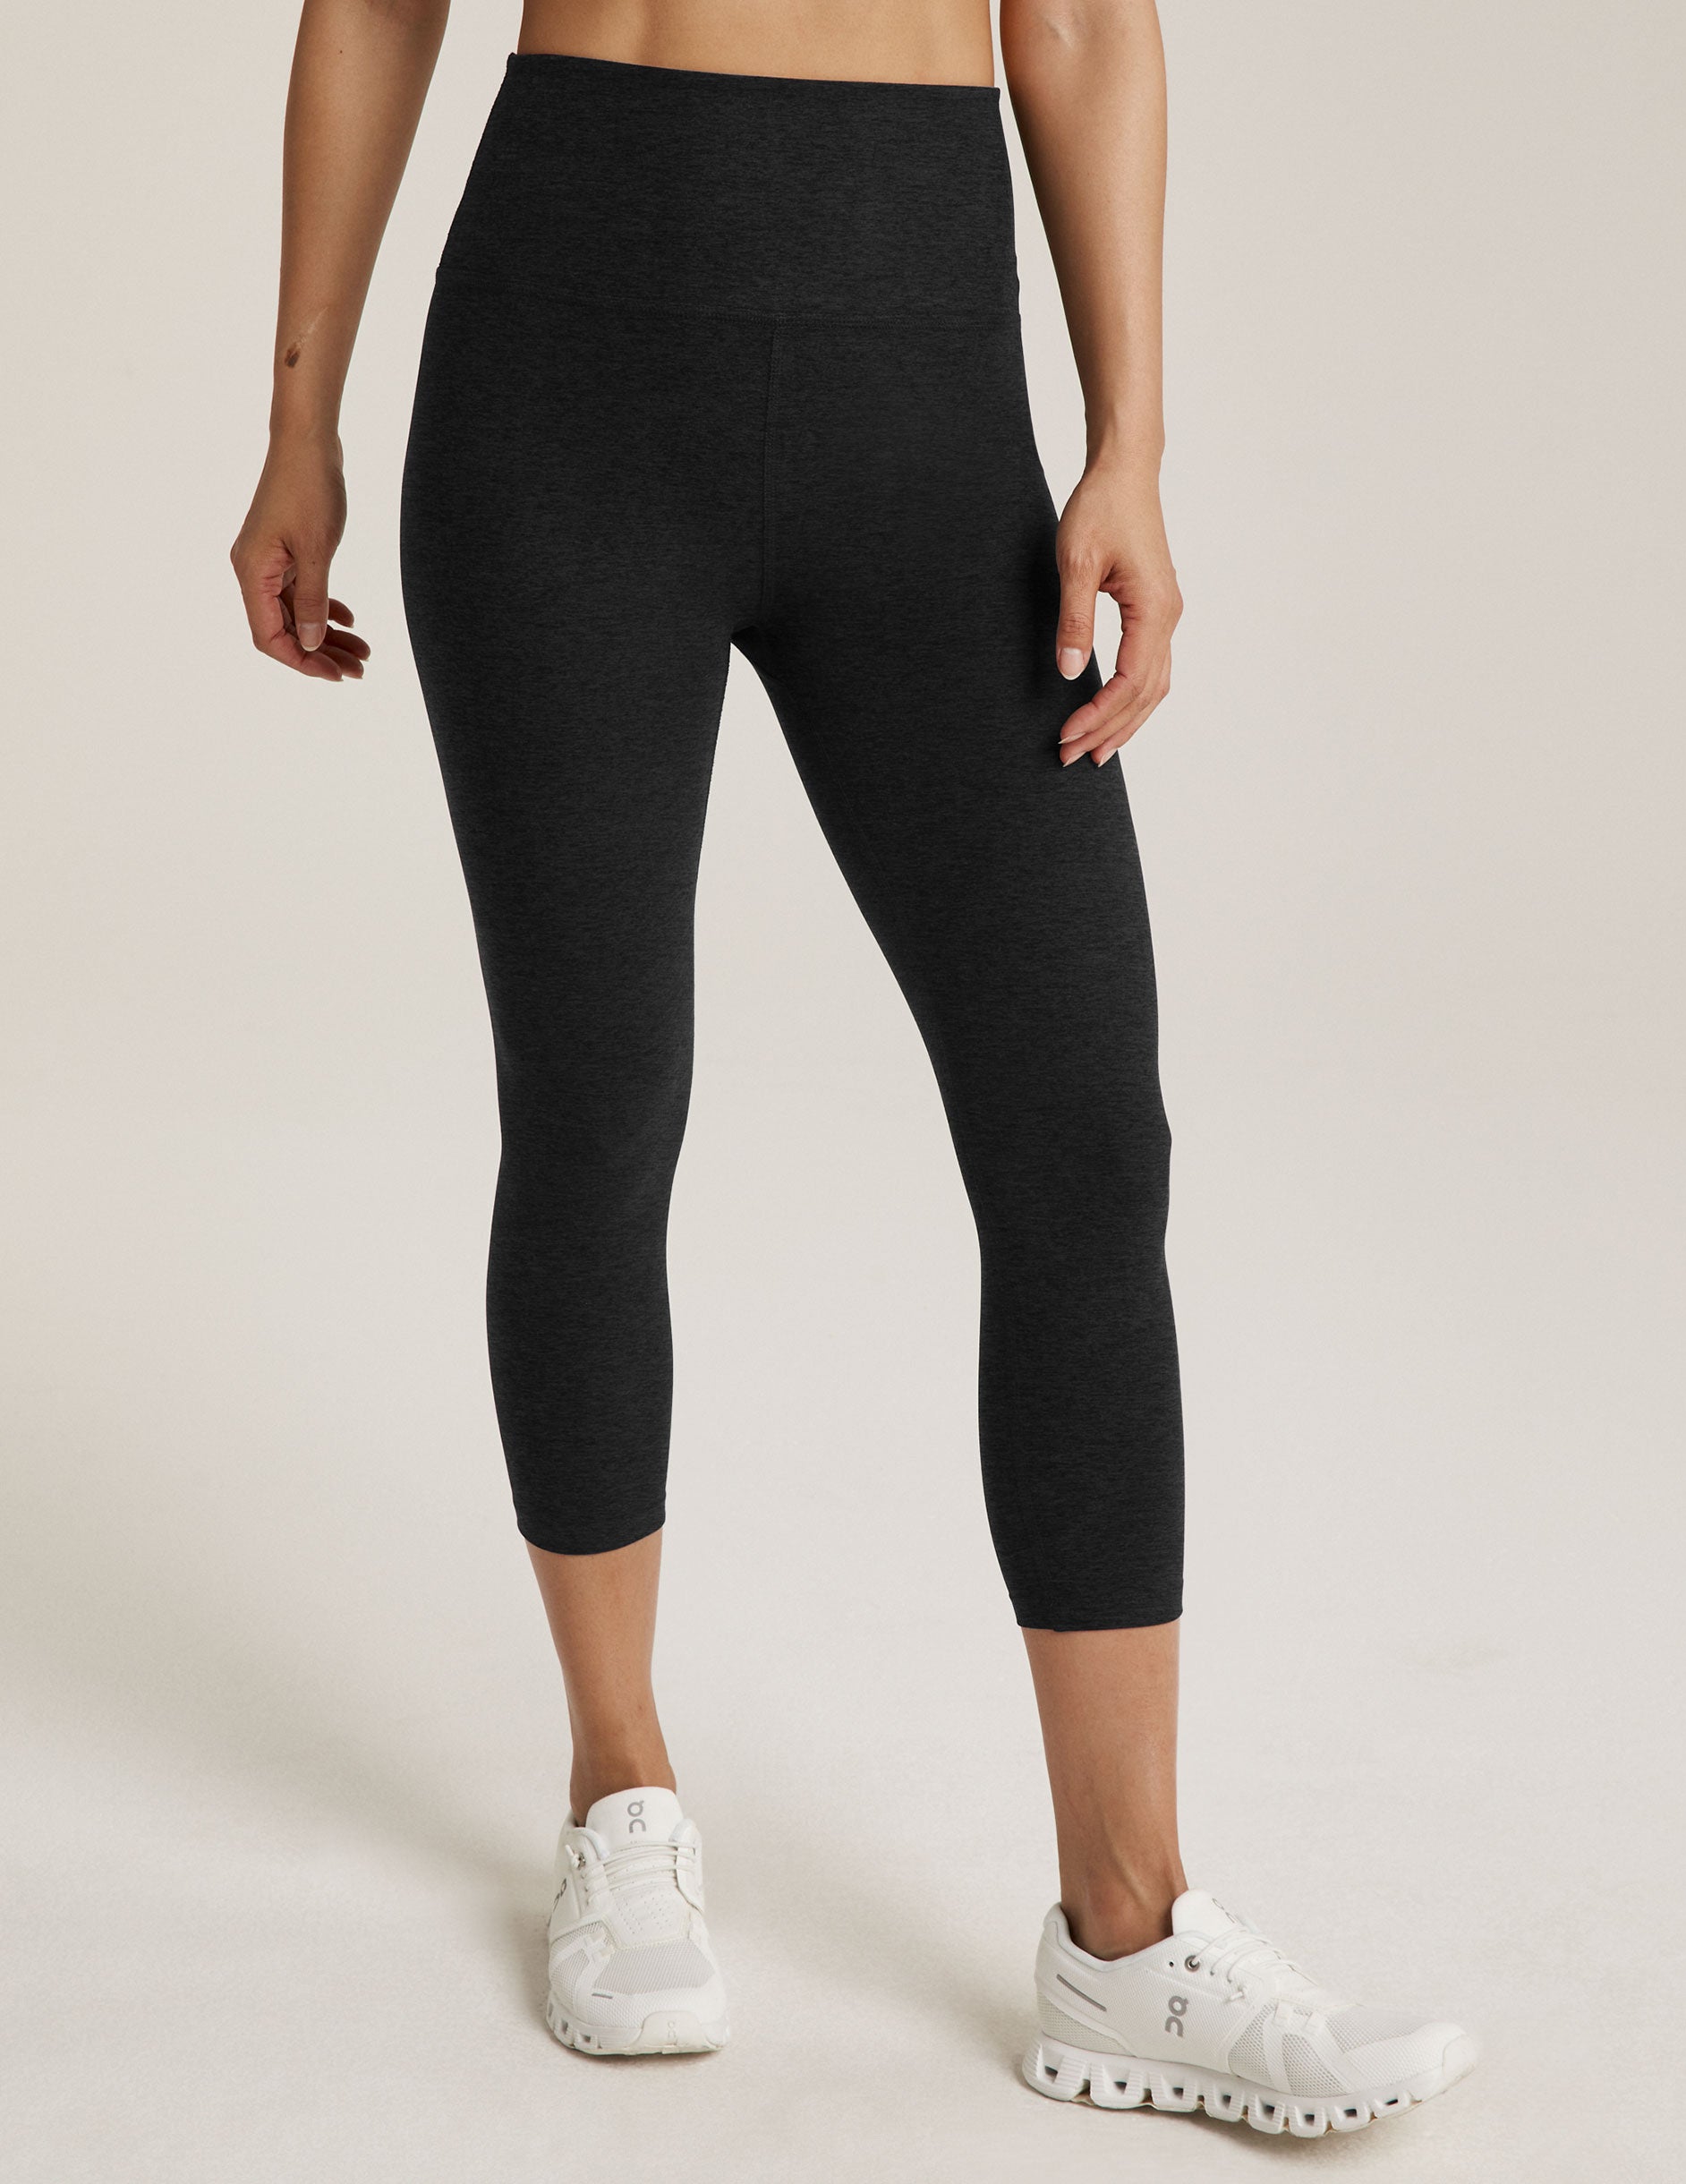 Black Splash* Design Capri-Length Yoga Leggings Ladies Sizes XS-XL – FLOW  with Debbie Fox